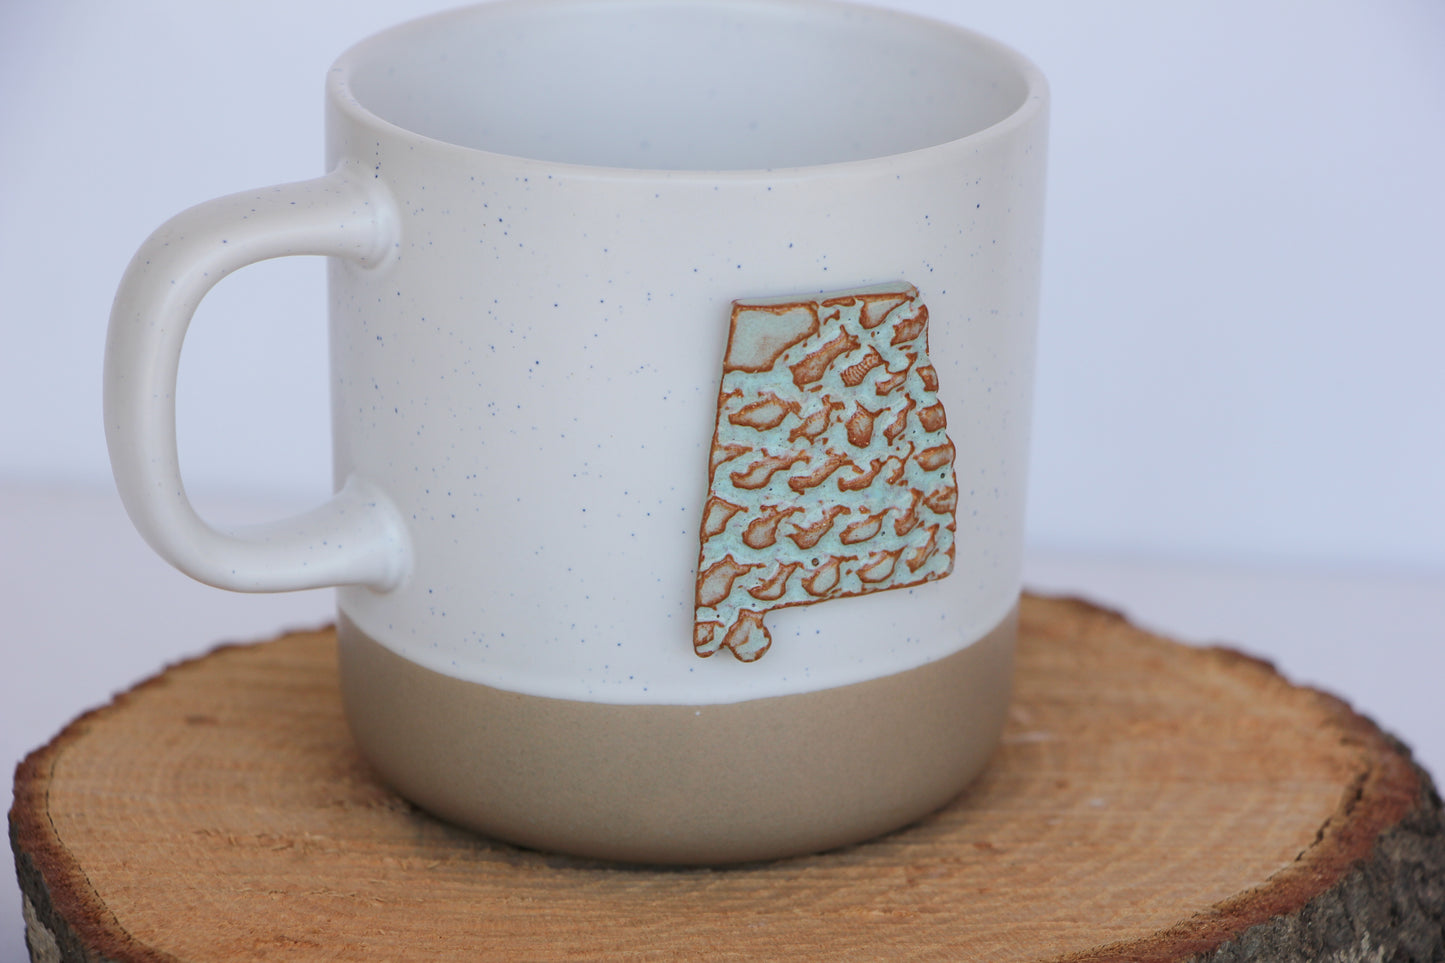 Coastal Alabama College 15 oz. Alumni Ceramic Coffee Mug